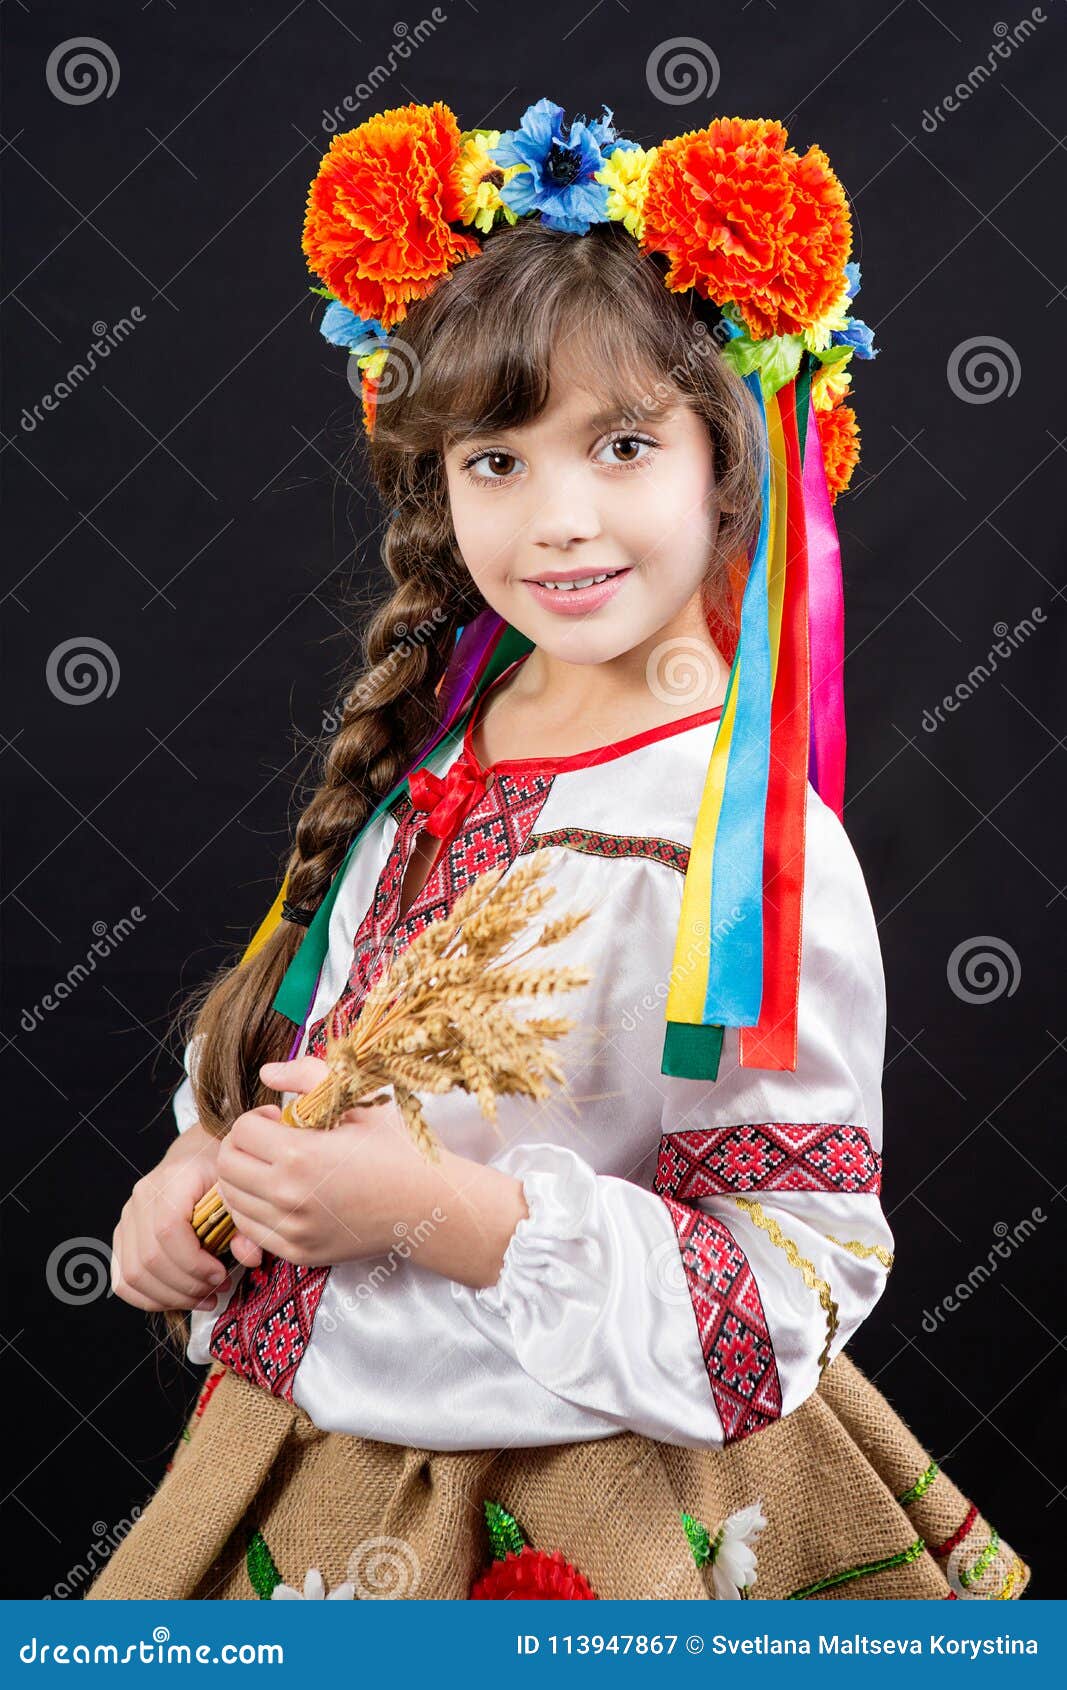 Ukraine young girls